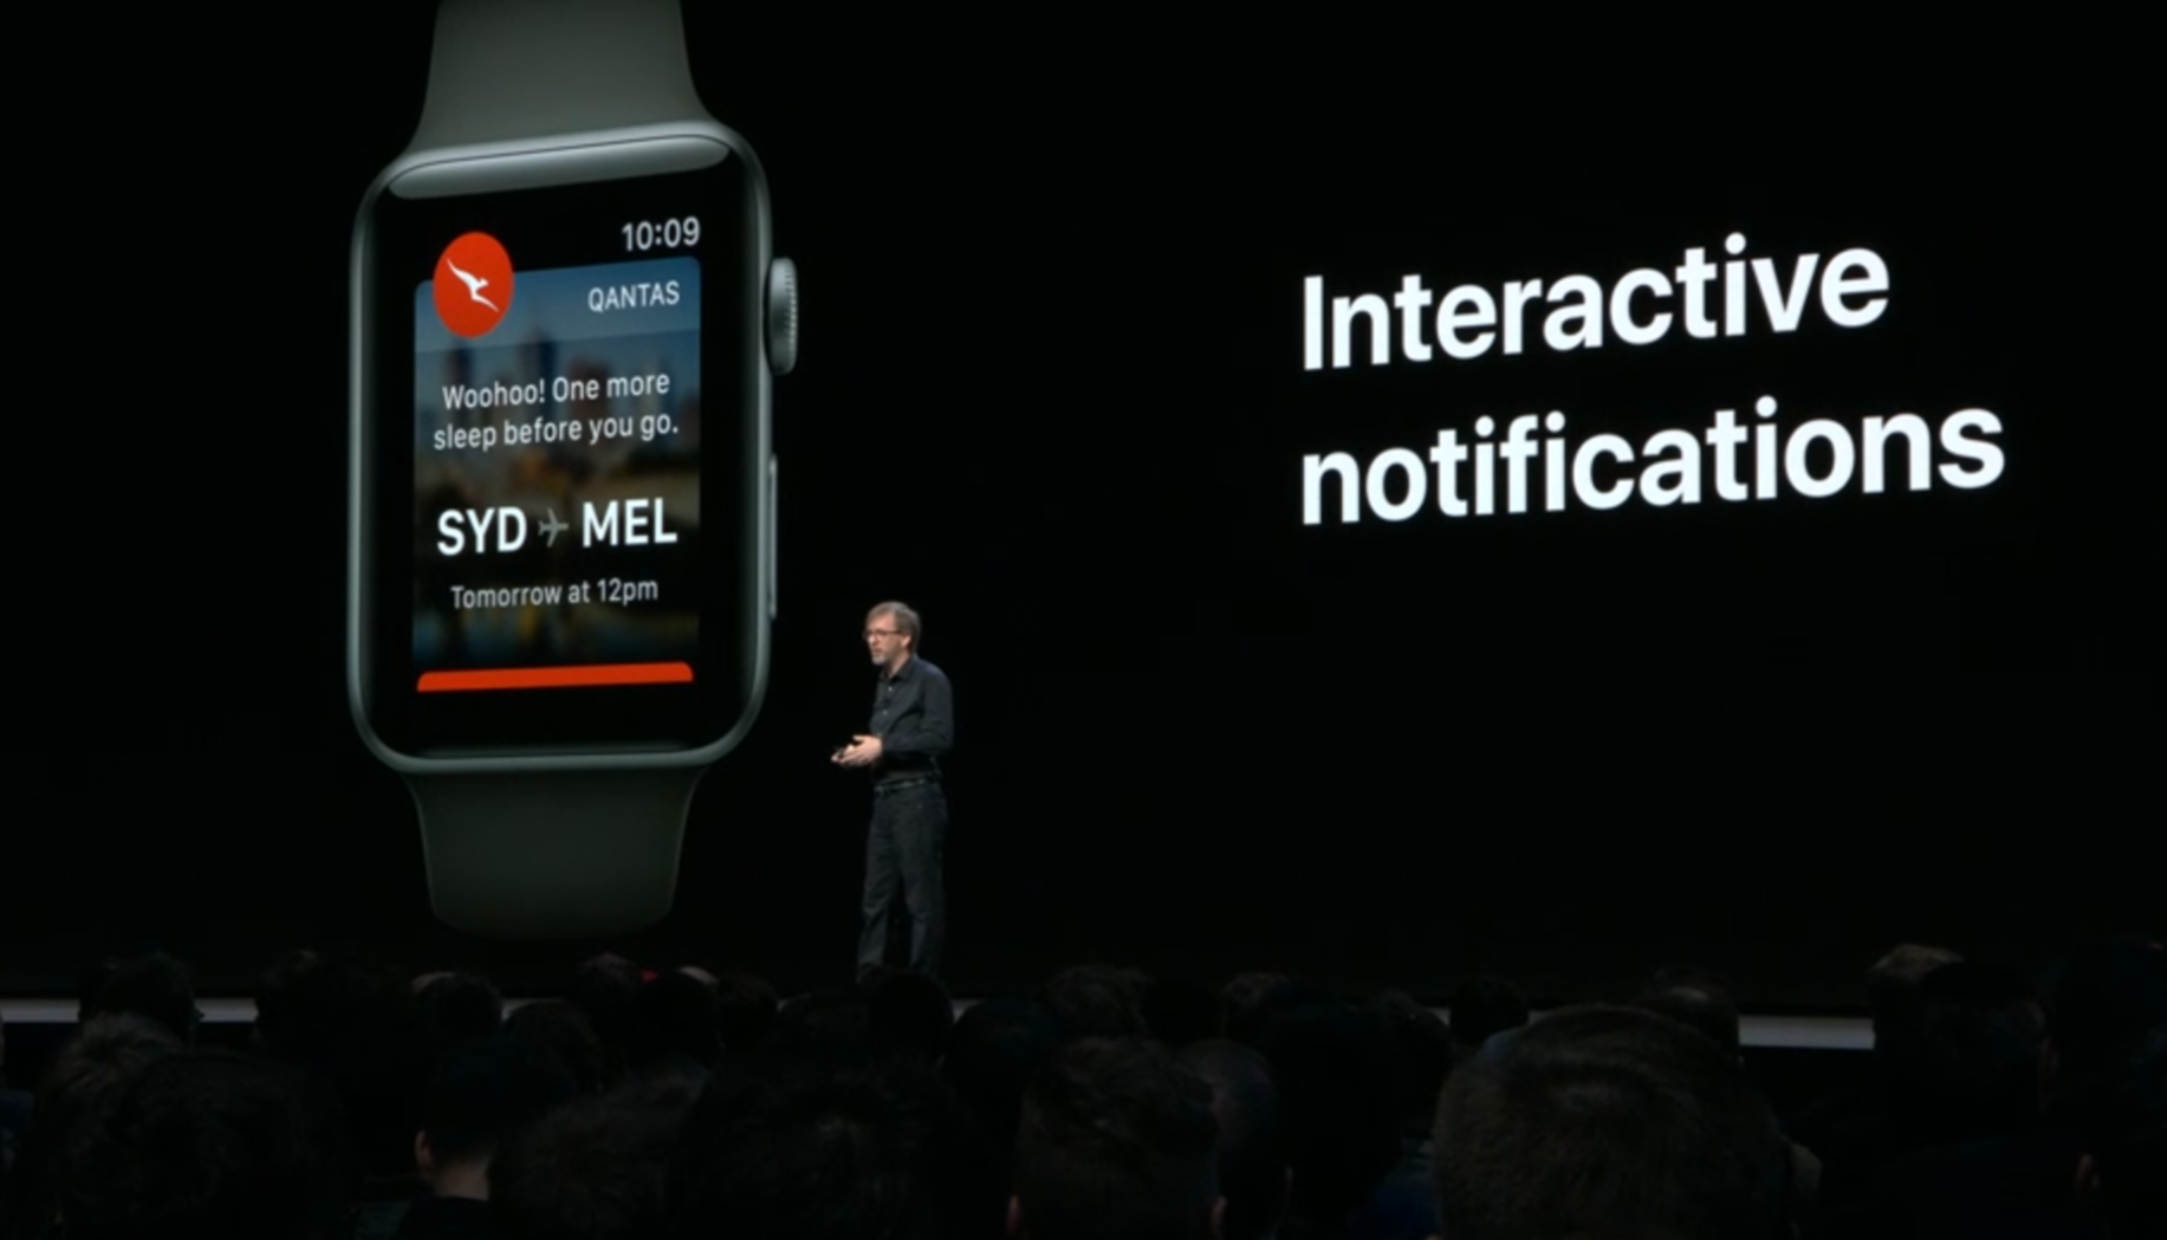 Mac sierra preview app has changed iphone